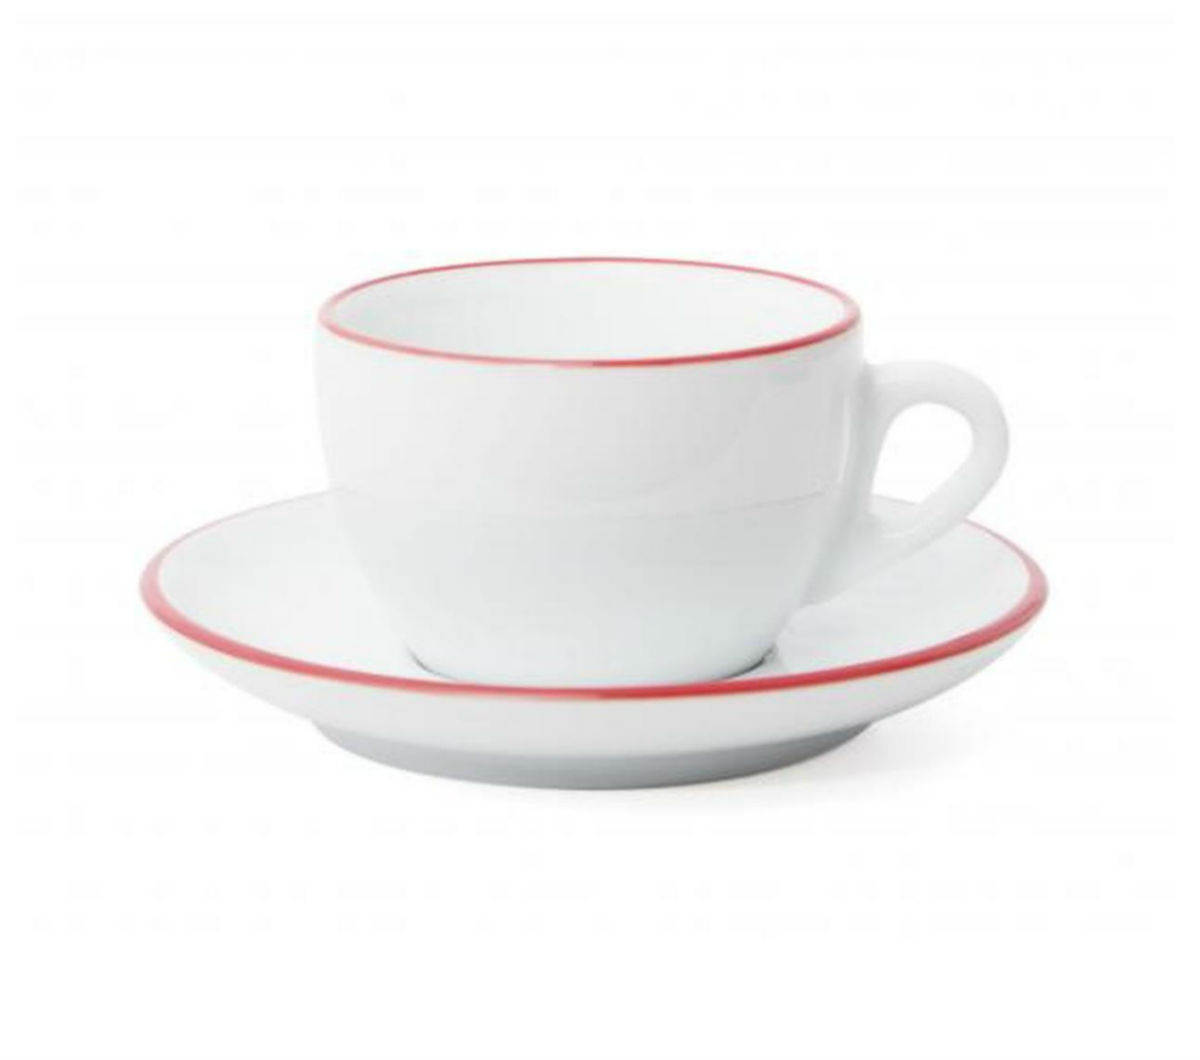 "PALERMO" RED RIM Cappuccino Cups 150ml ("Competition")